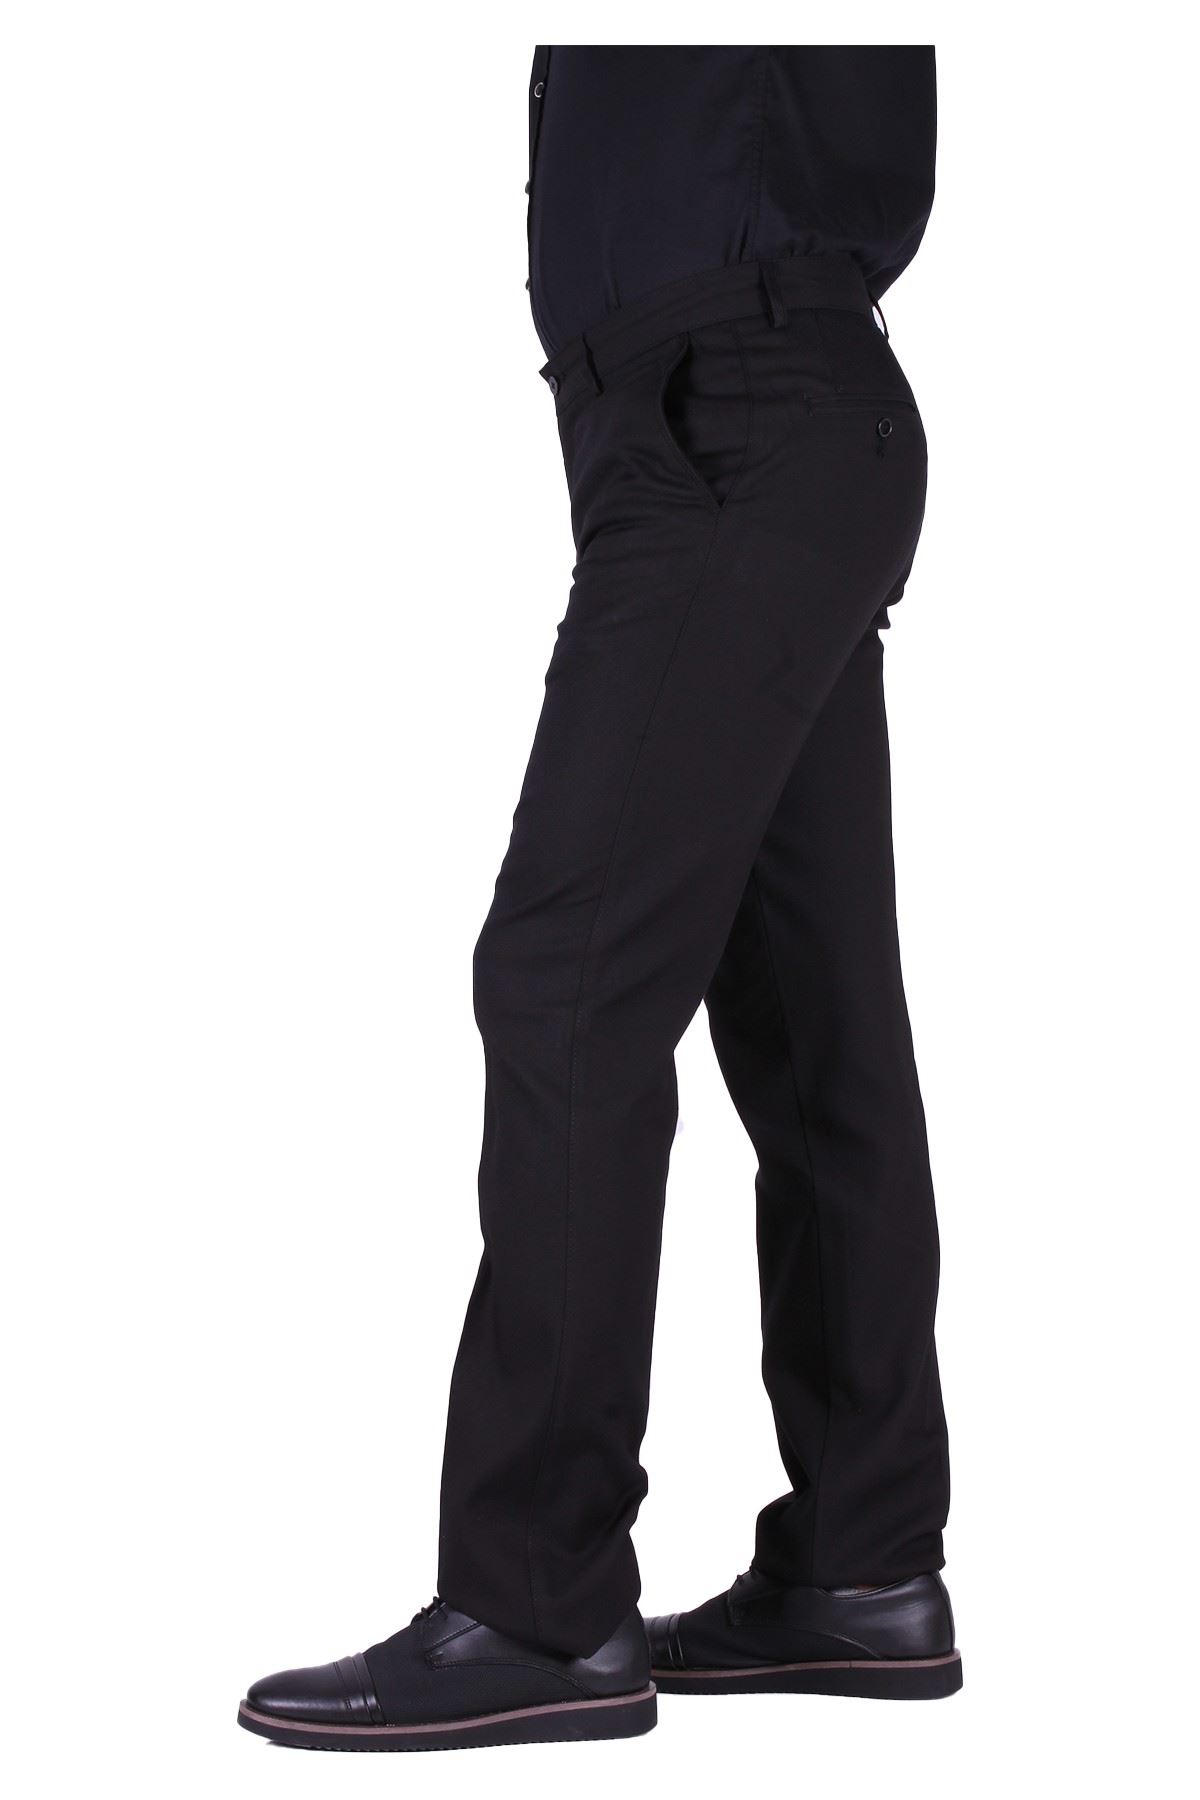 Giyinsen Erkek Siyah Klasik Pantolon - 23KI53008006